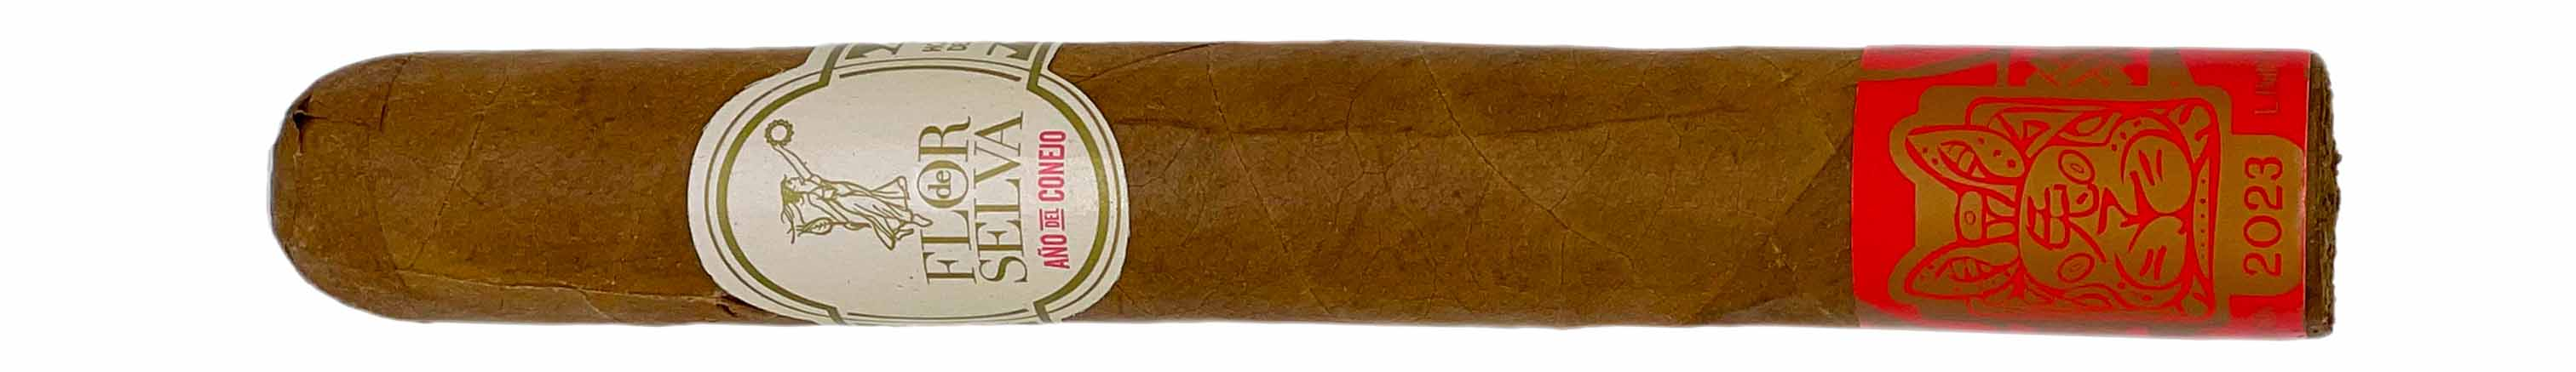 Flor de Selva El Ano del Conejo - Limited Edition Cigars